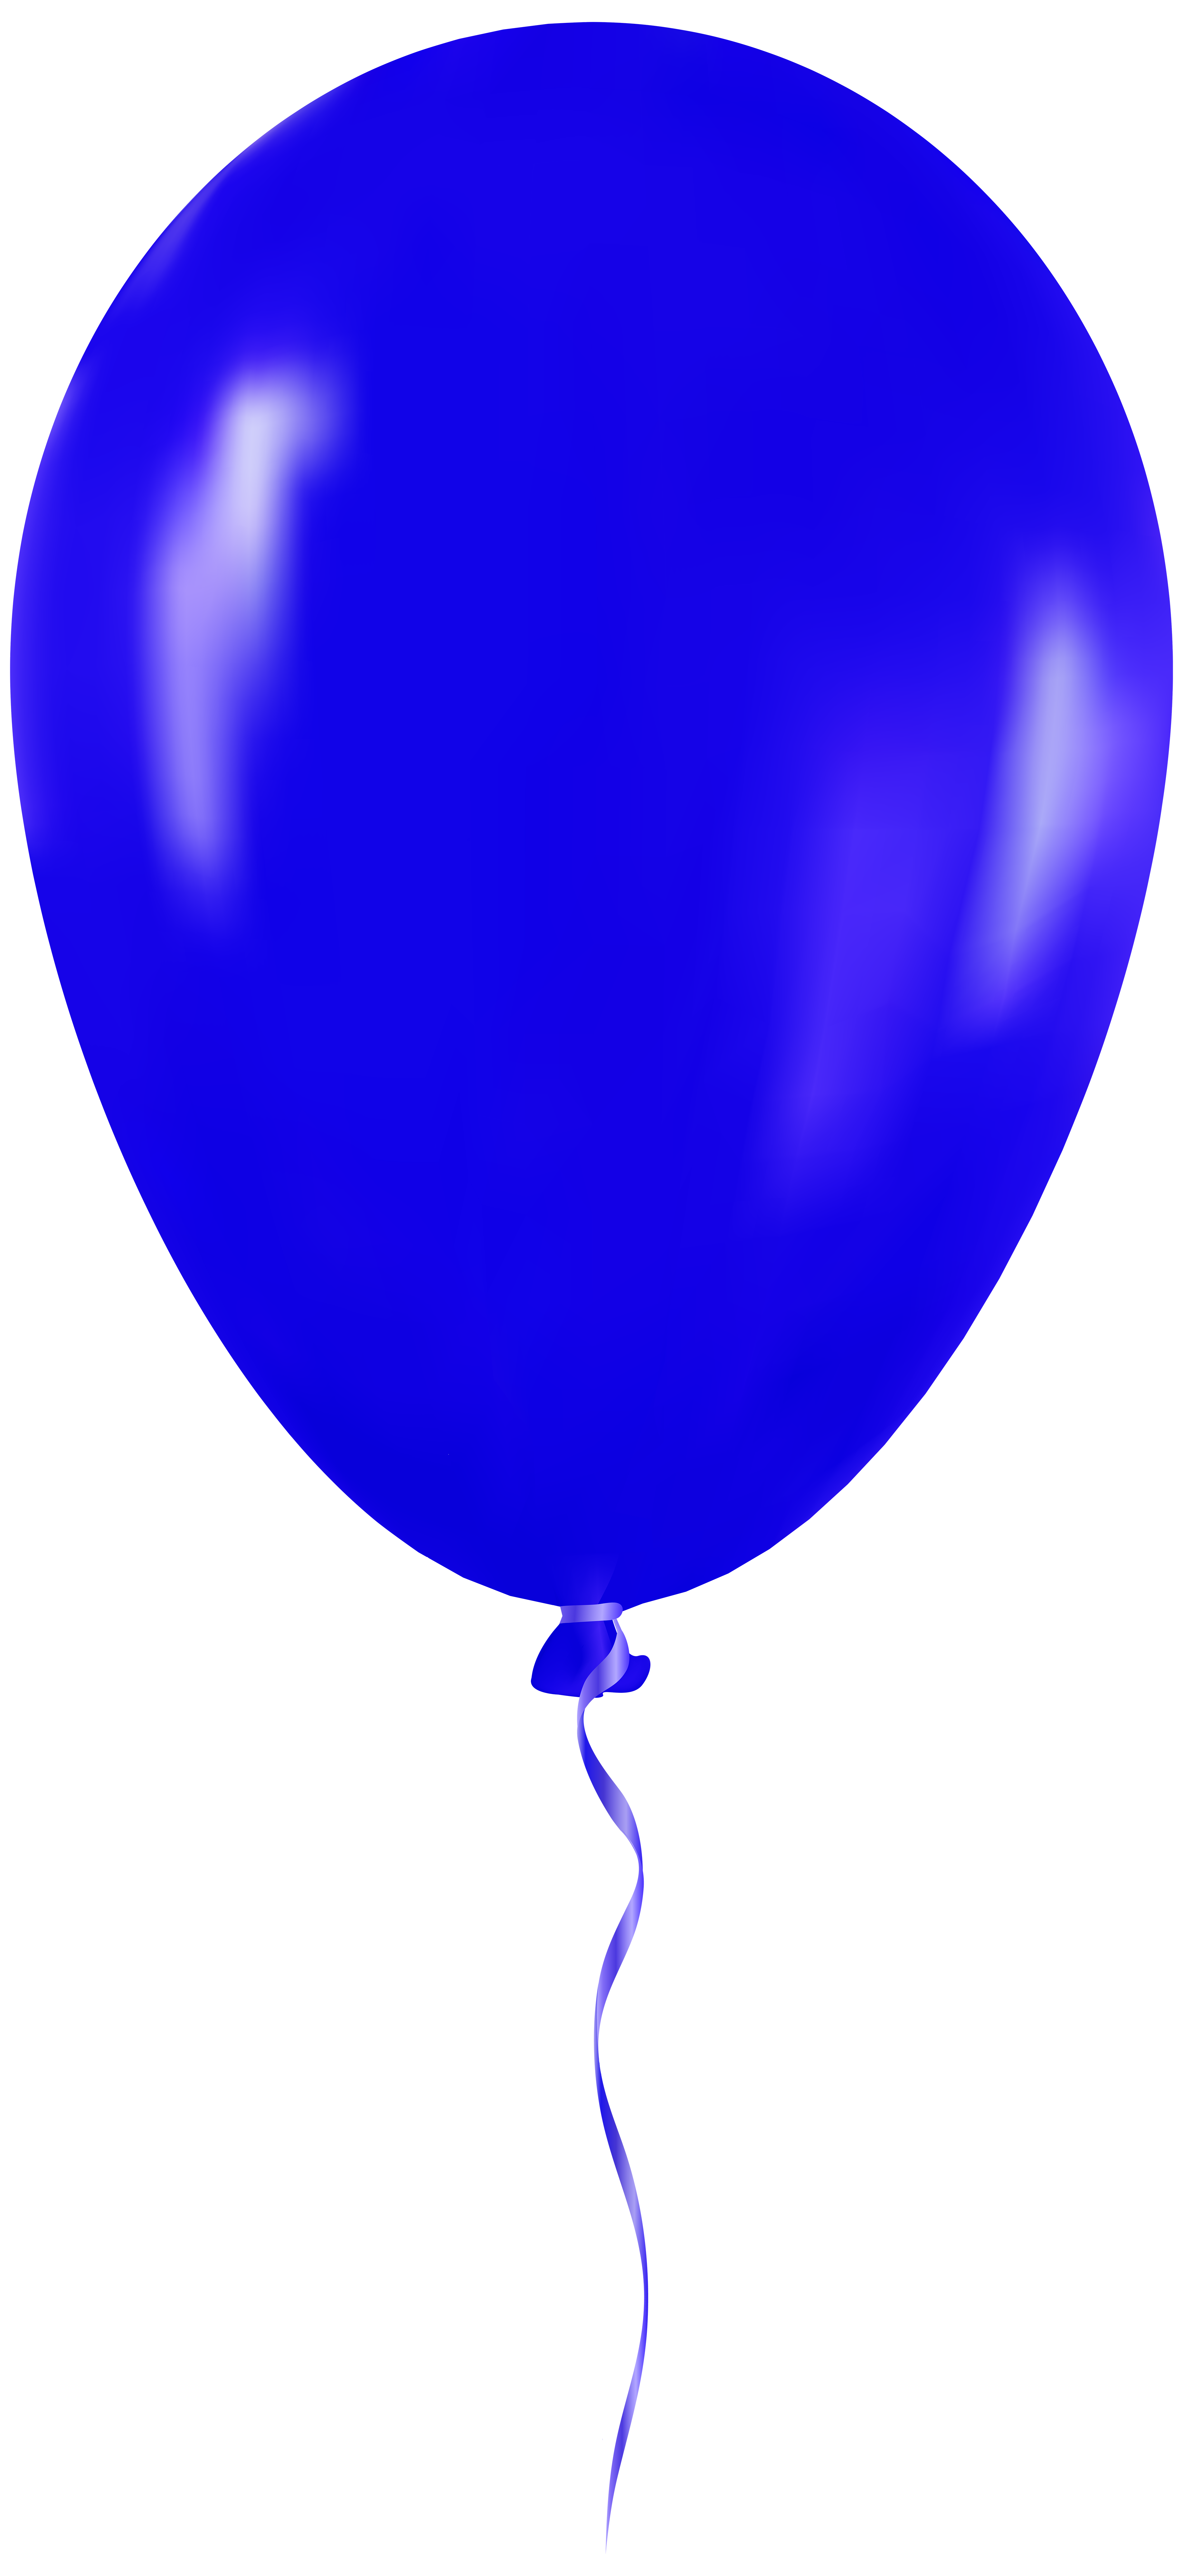 Картинка шар на прозрачном фоне. Воздушный шарик. Синий воздушный шарик. Голубой воздушный шар. Воздушные шарики на прозрачном фоне.